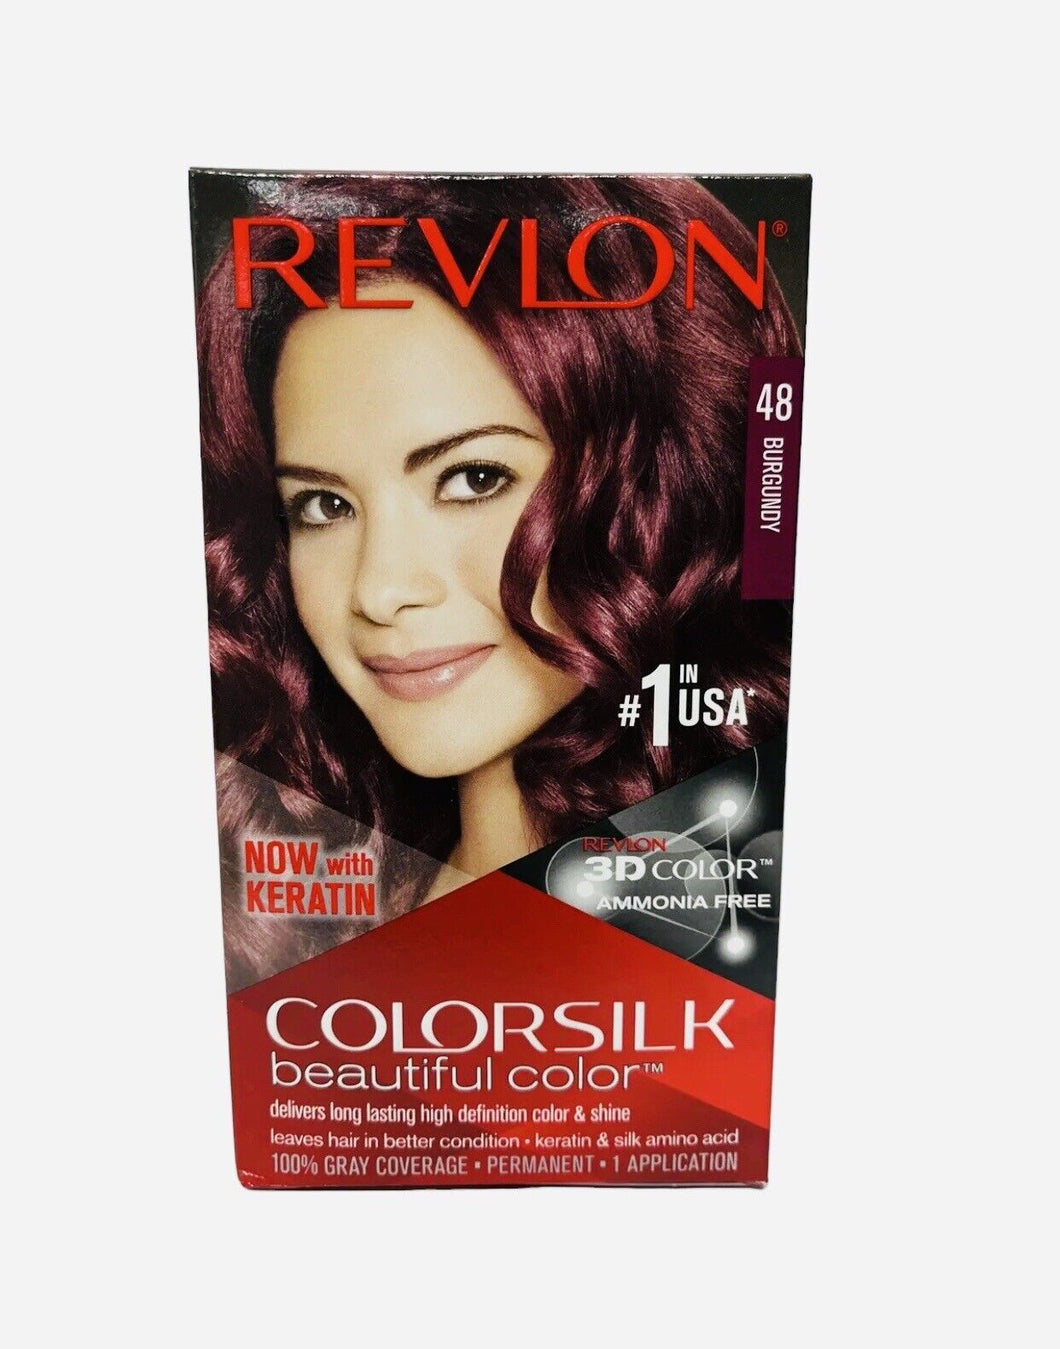 Revlon Colorsilk 48 Burgundy Hair Color with Keratin